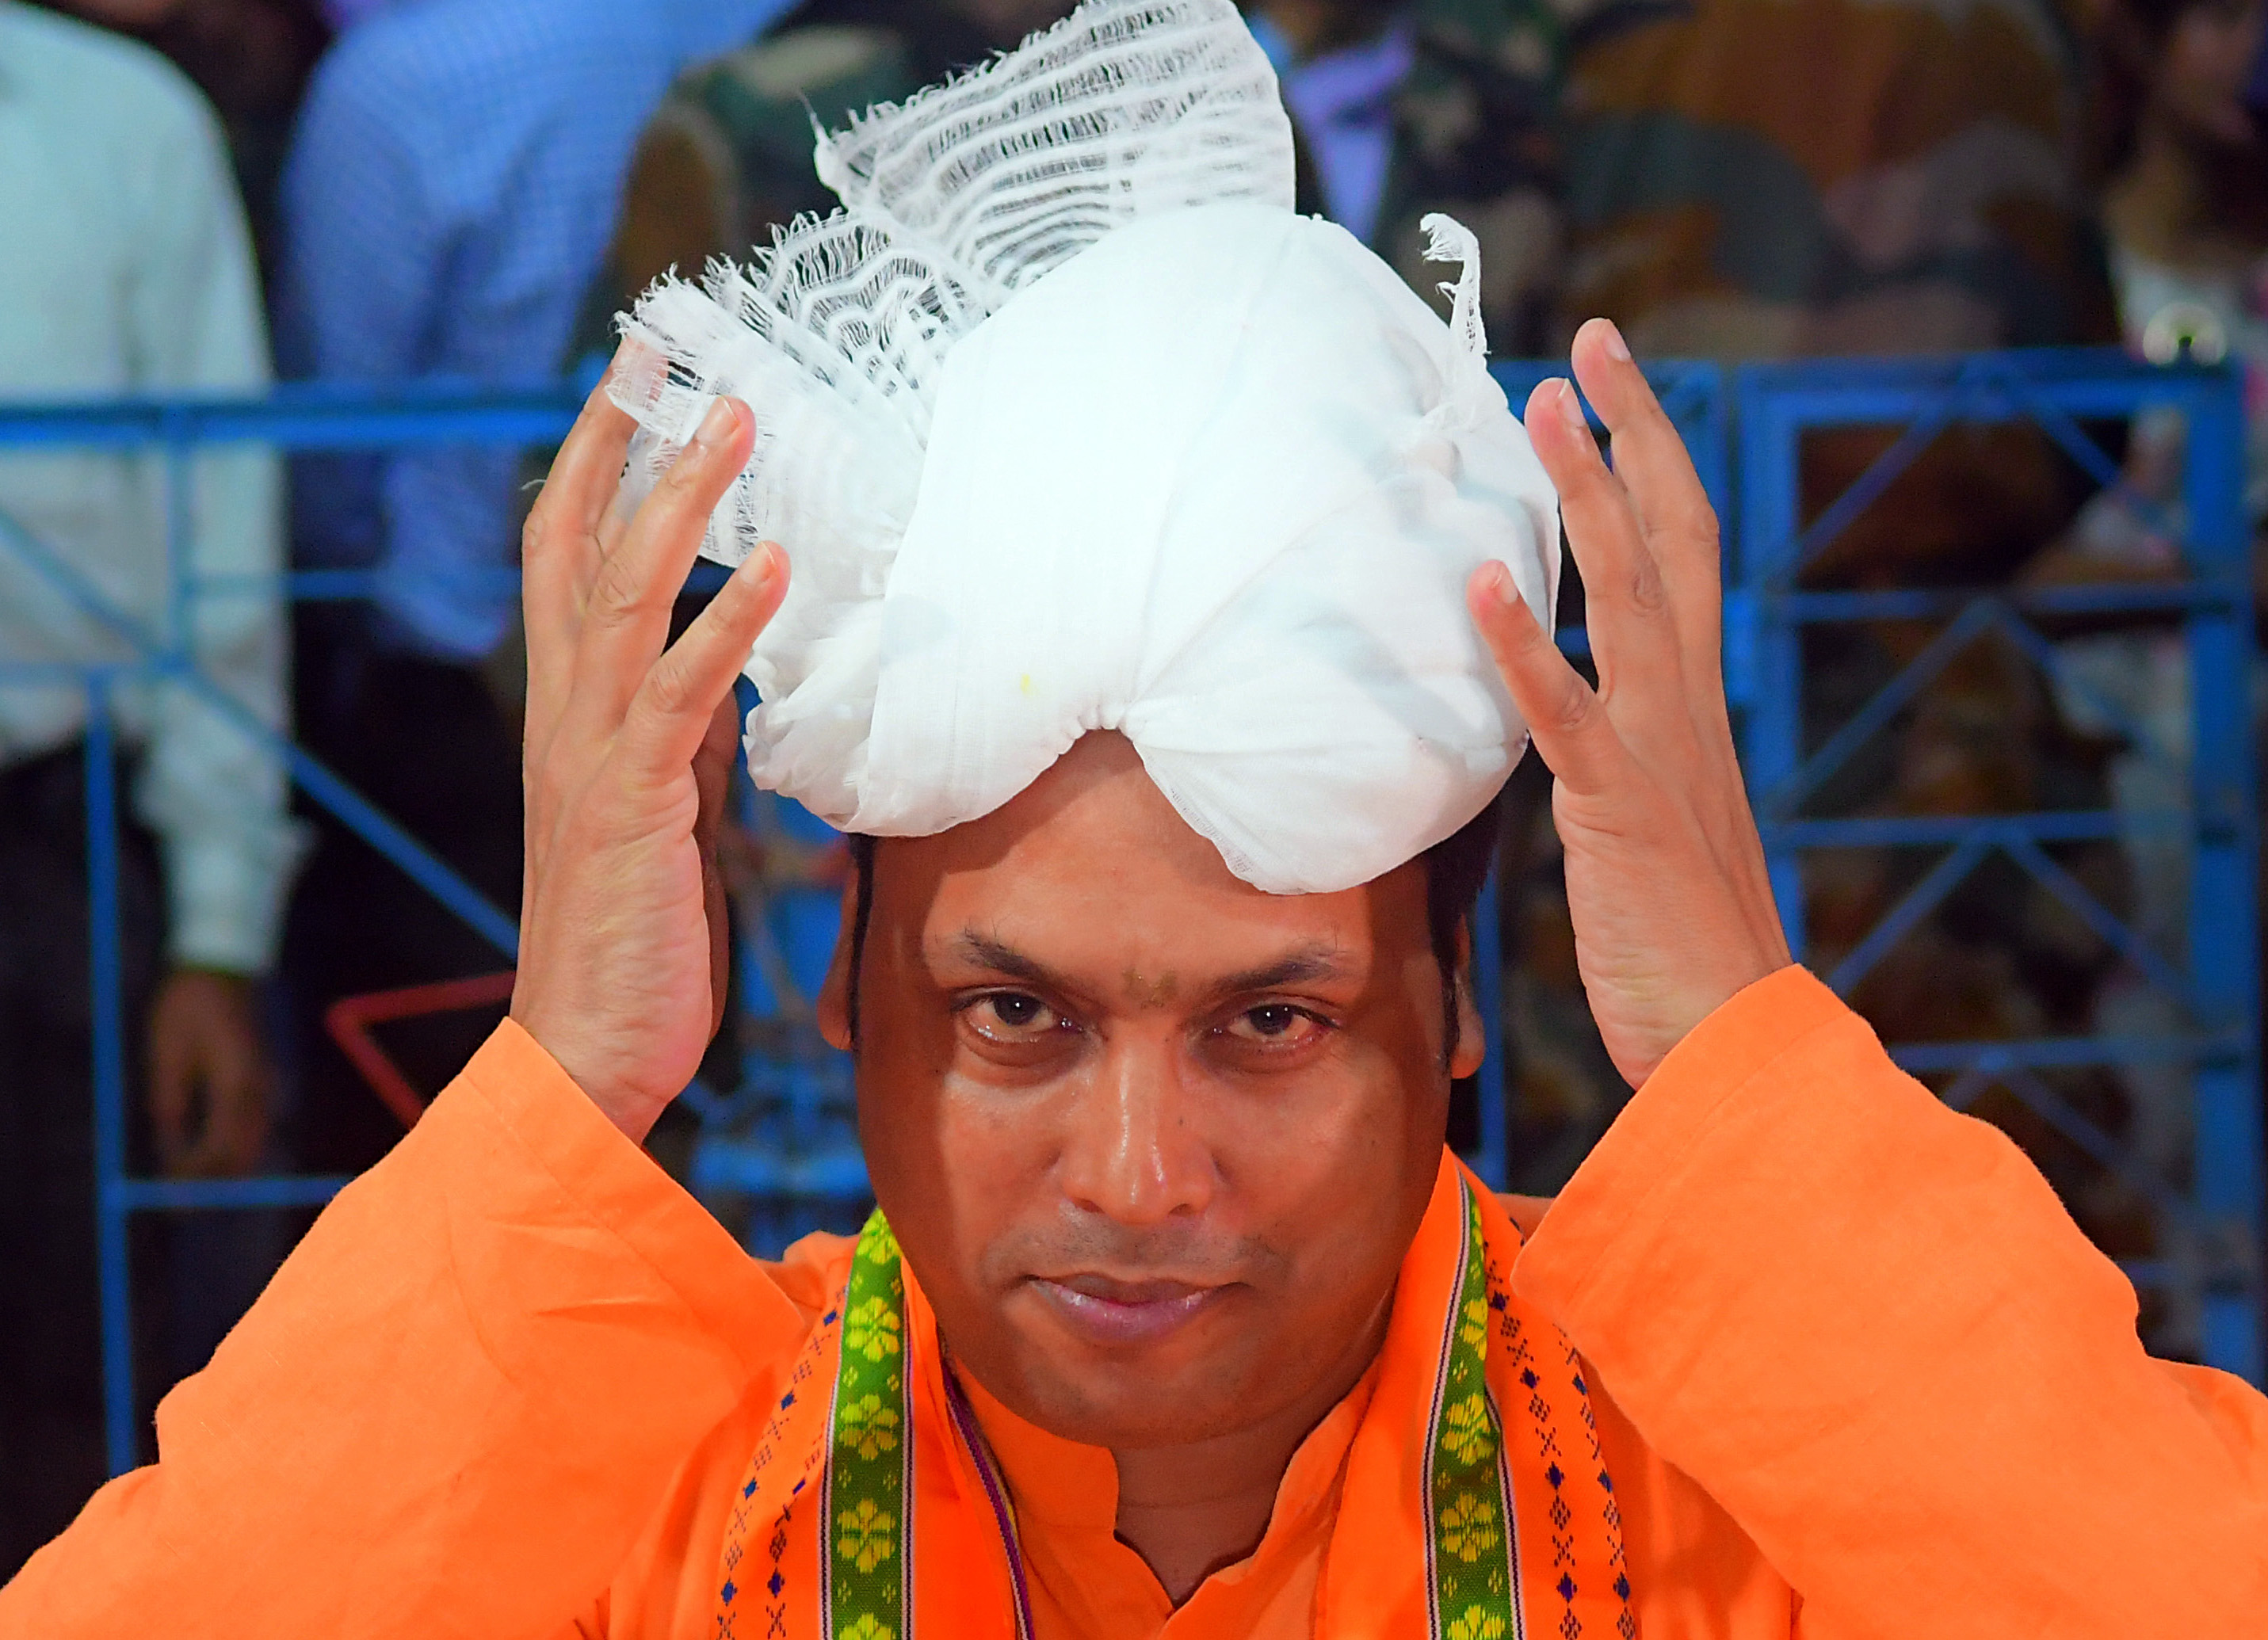 Tripura CM Biplab Deb’s clarification after his ‘Punjabis, Jats comment’ sparked row